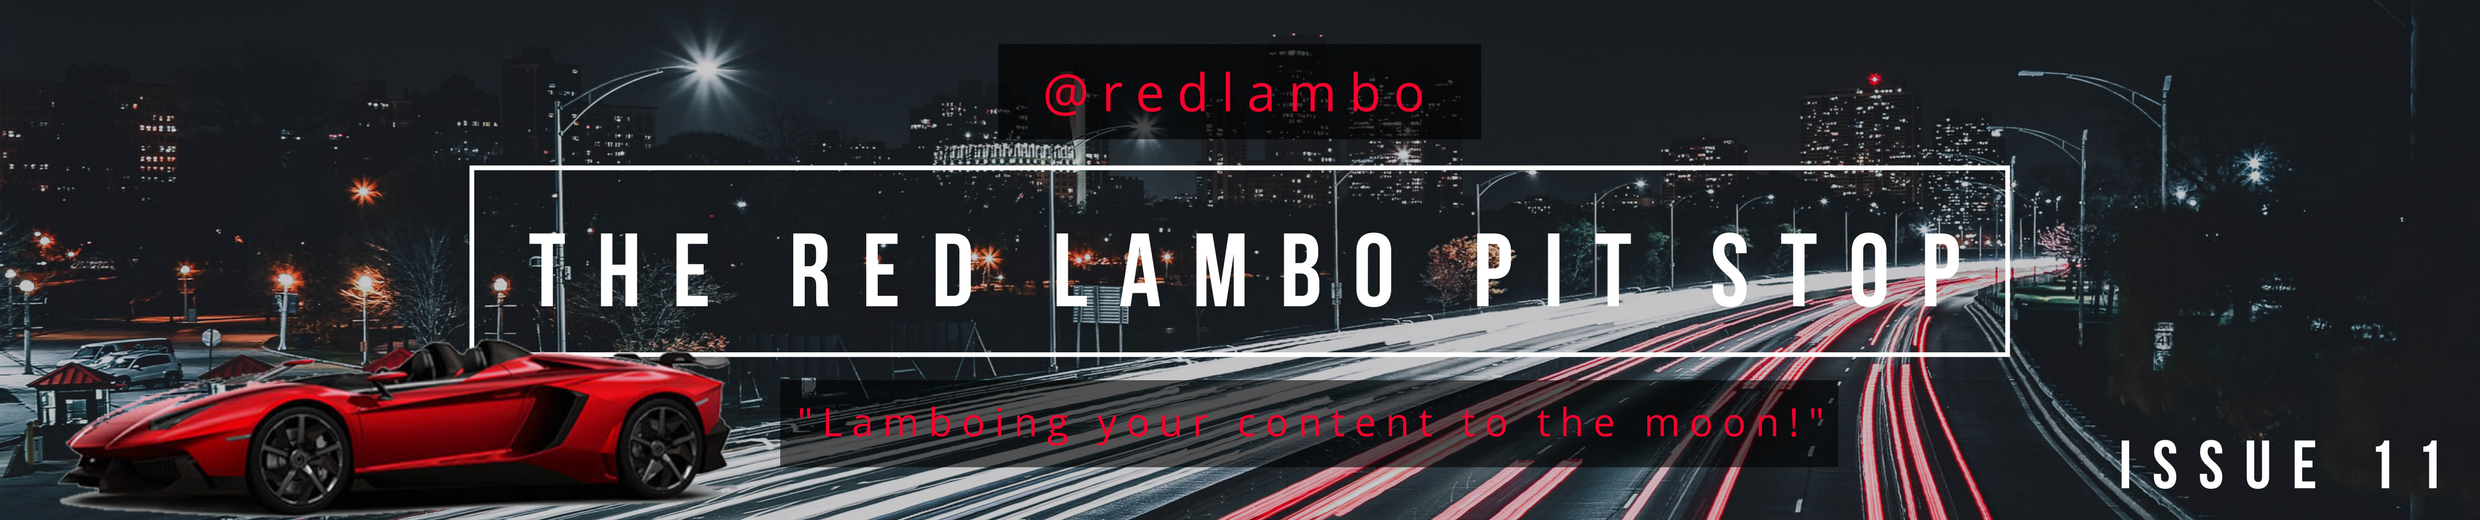 Red Lambo Header-10.png